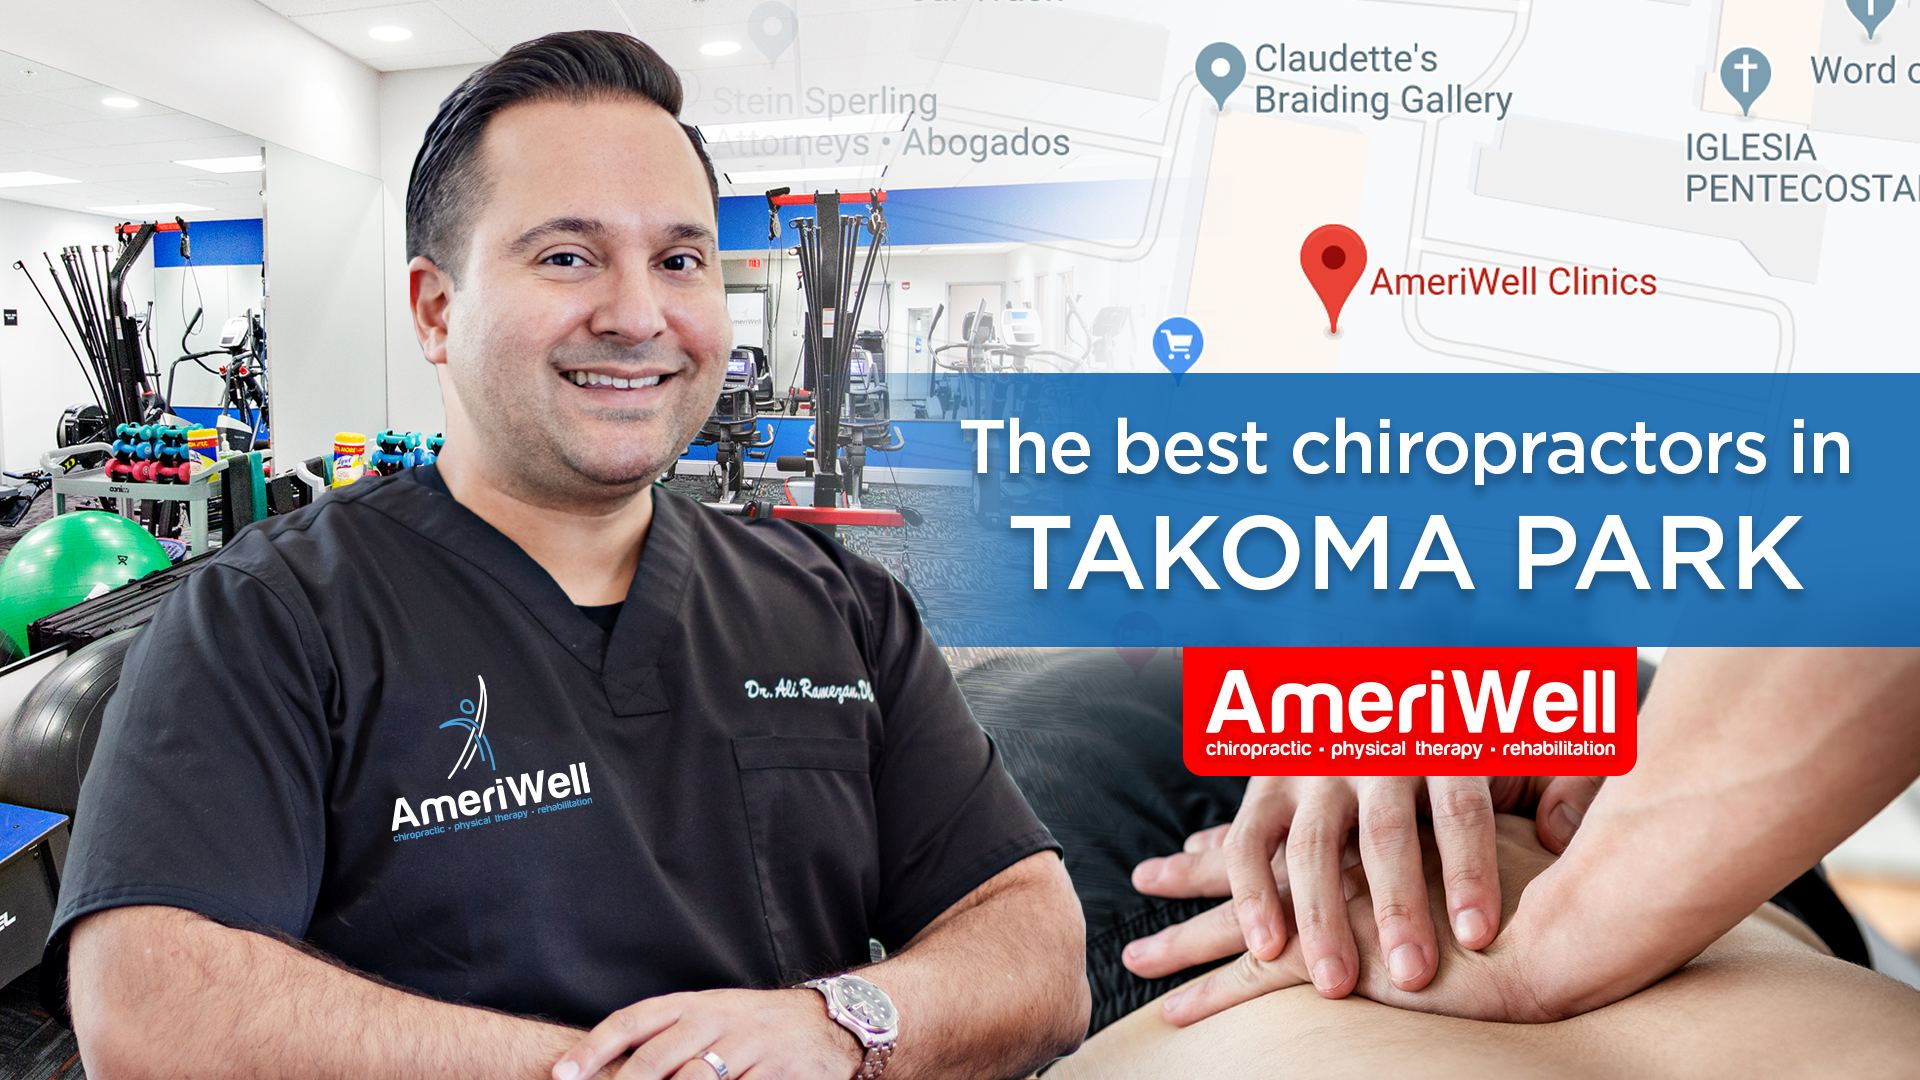 Takoma Park - Ameriwell Clinics the best chiropractors